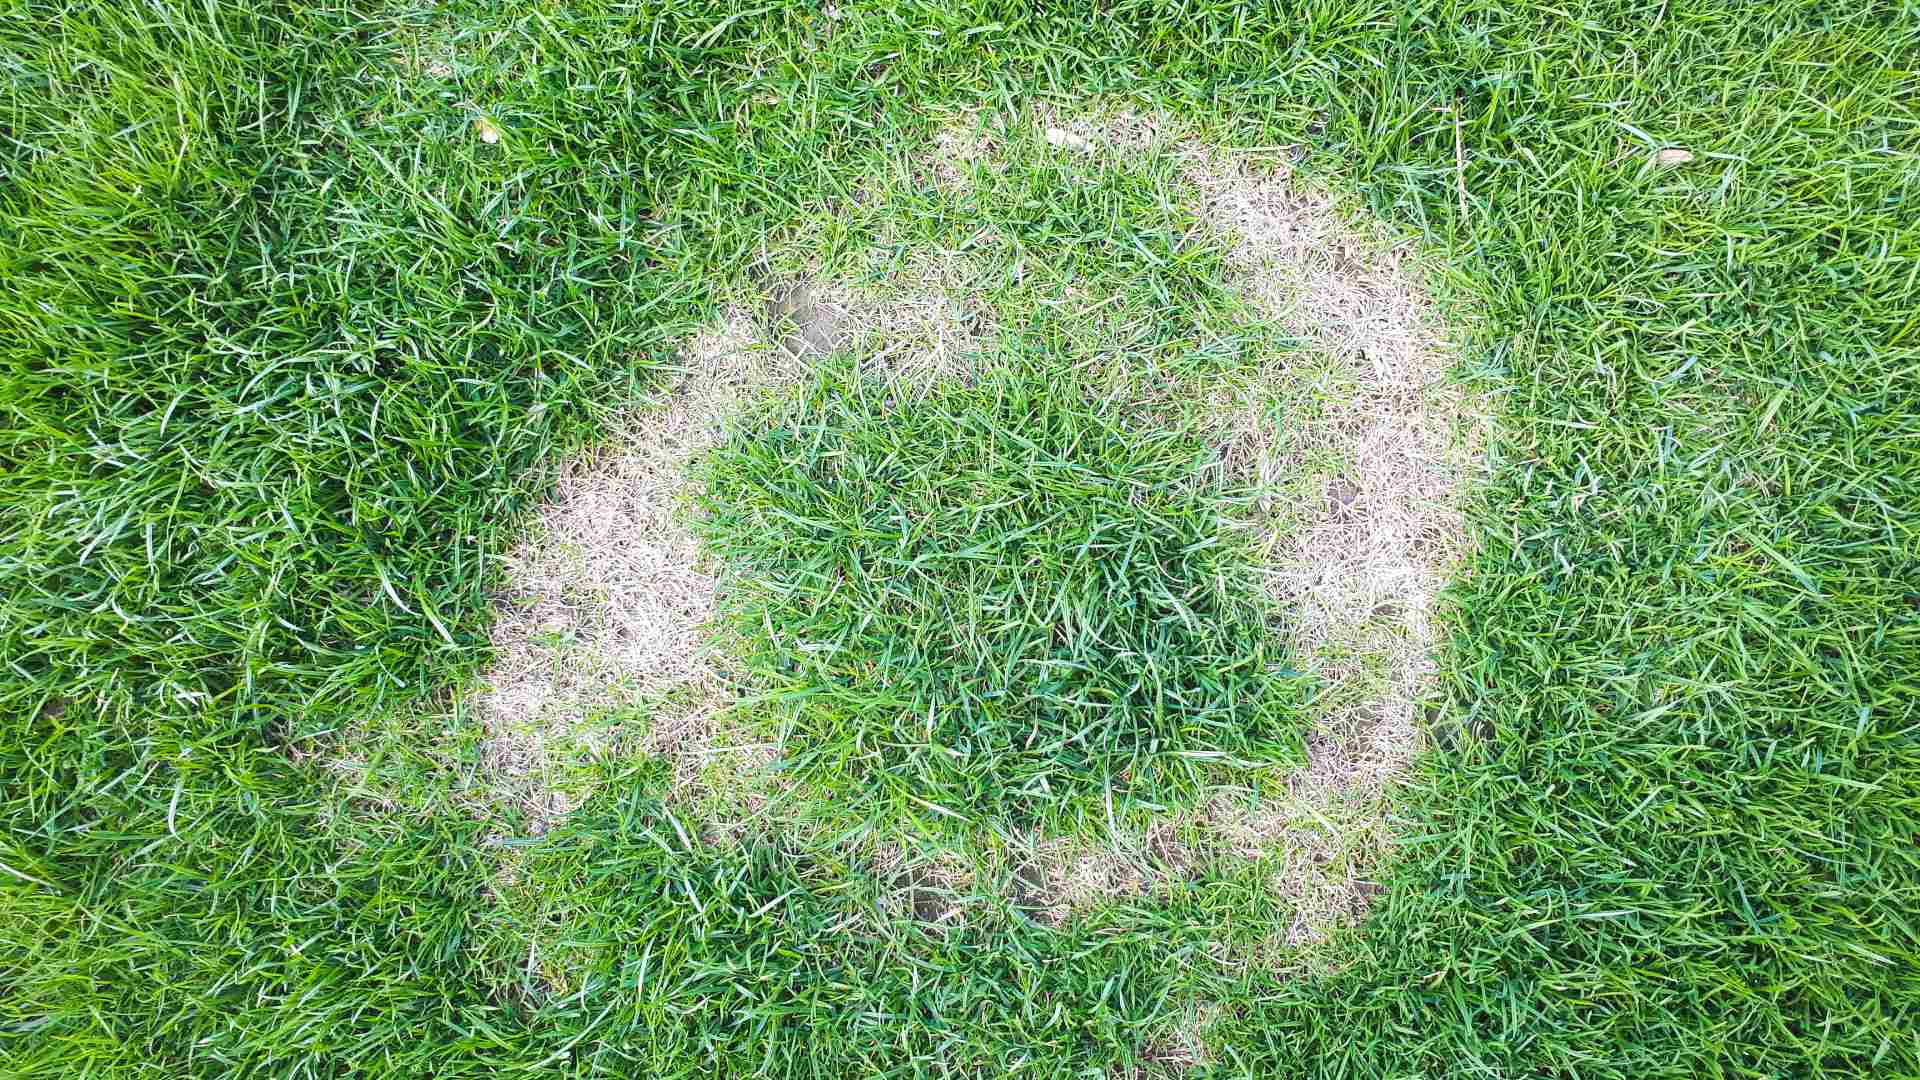 Necrotic ring lawn disease in North Mankato, MN.